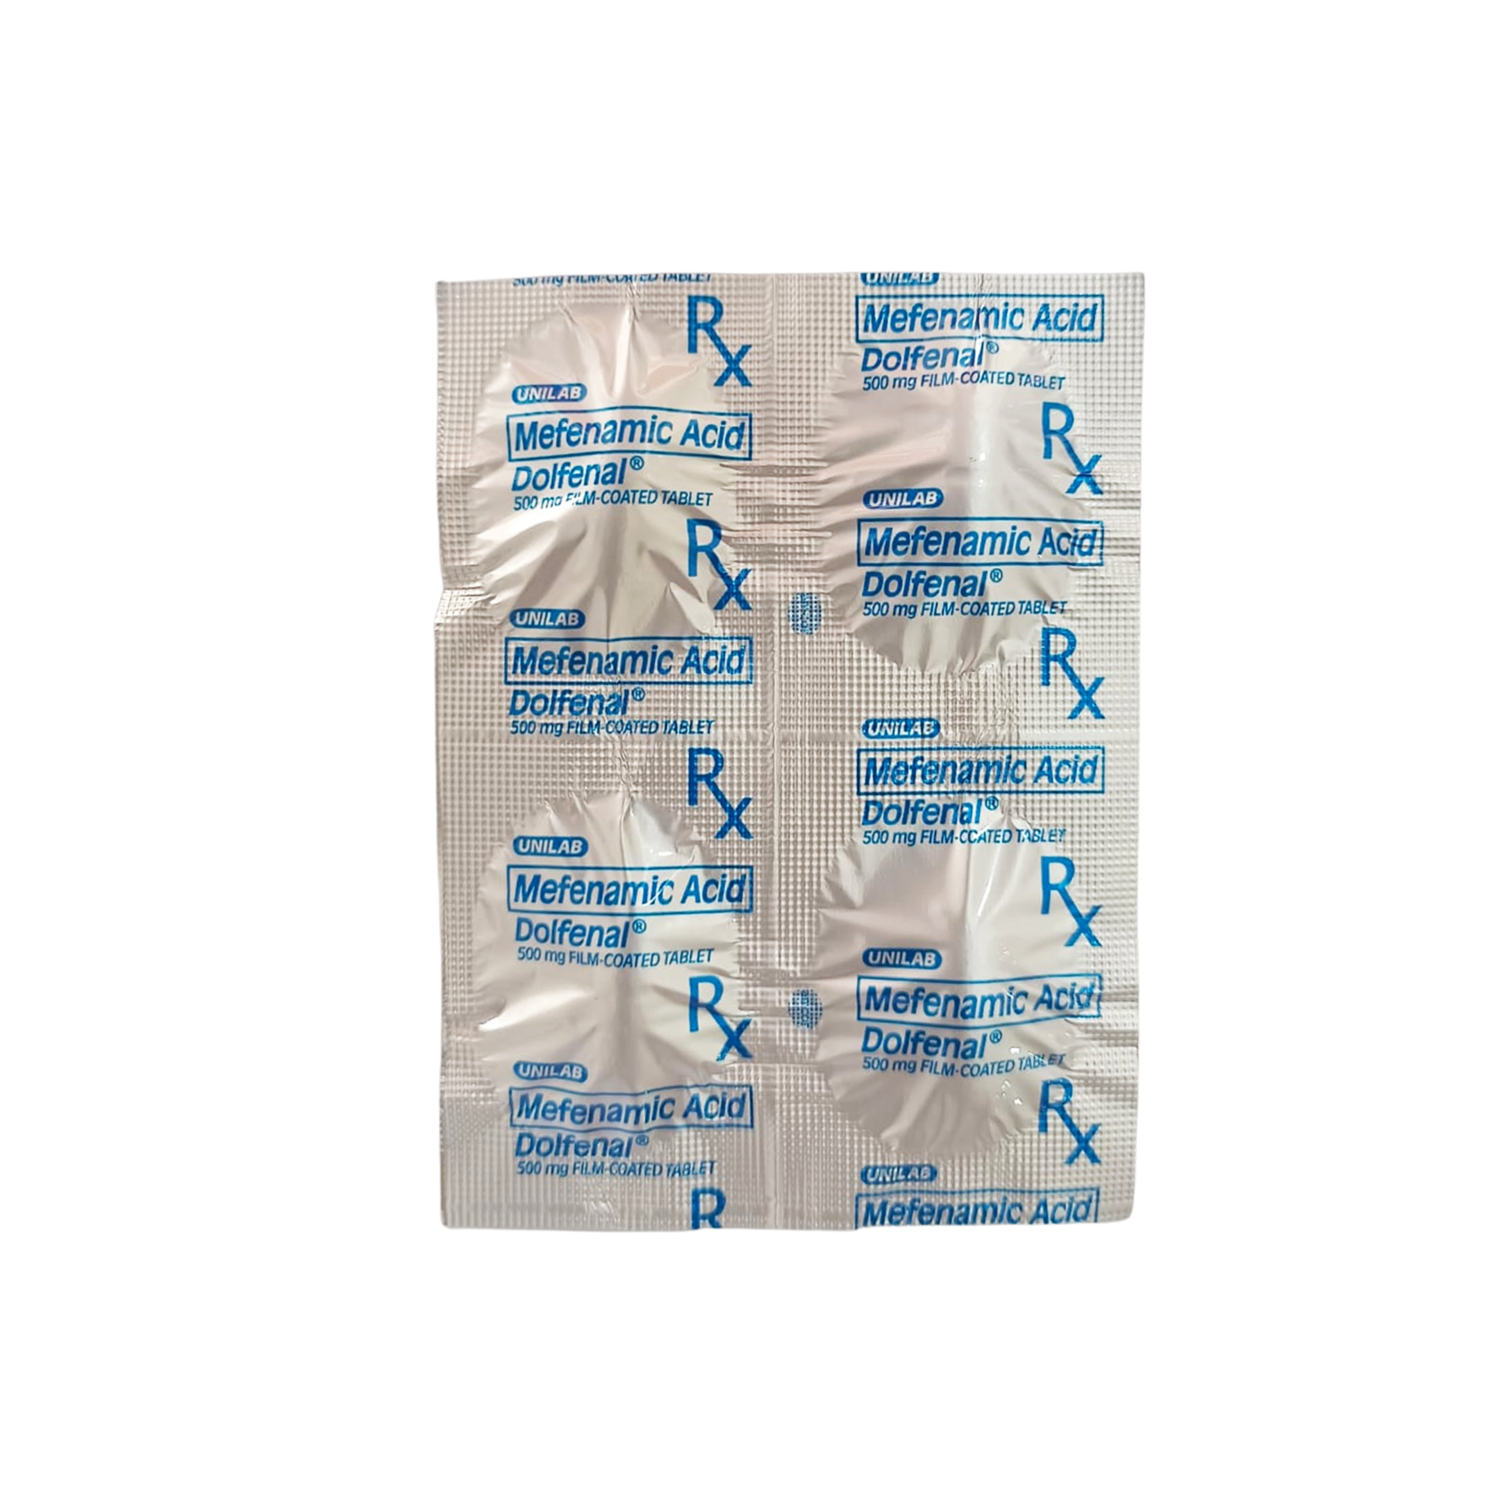 Mefenamic Acid Dolfenal 500mg (per capsule only)